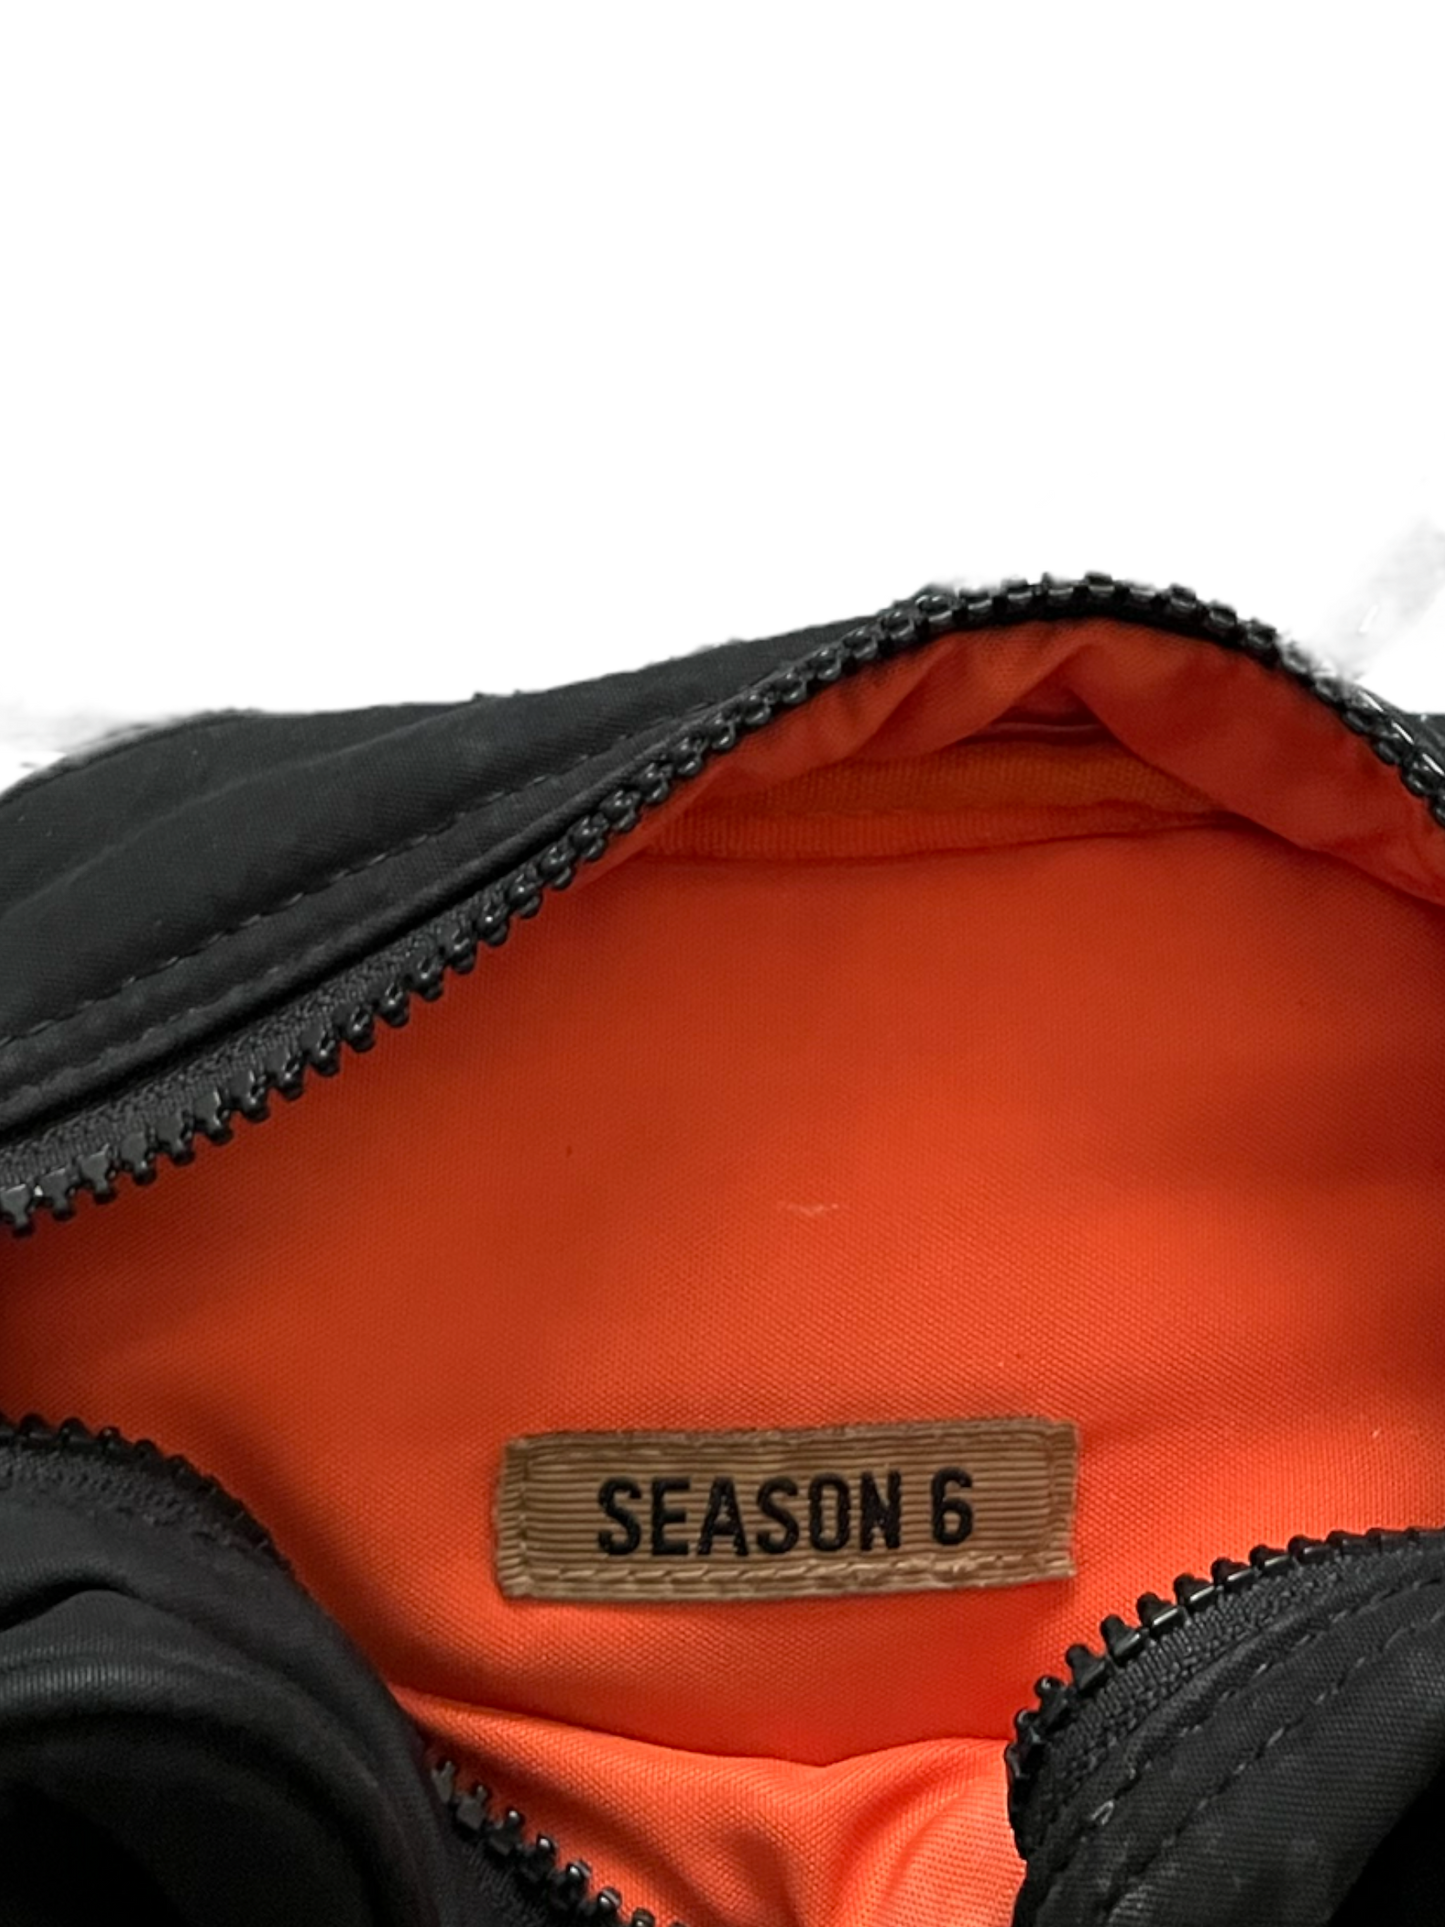 YZY Season 6 Bag